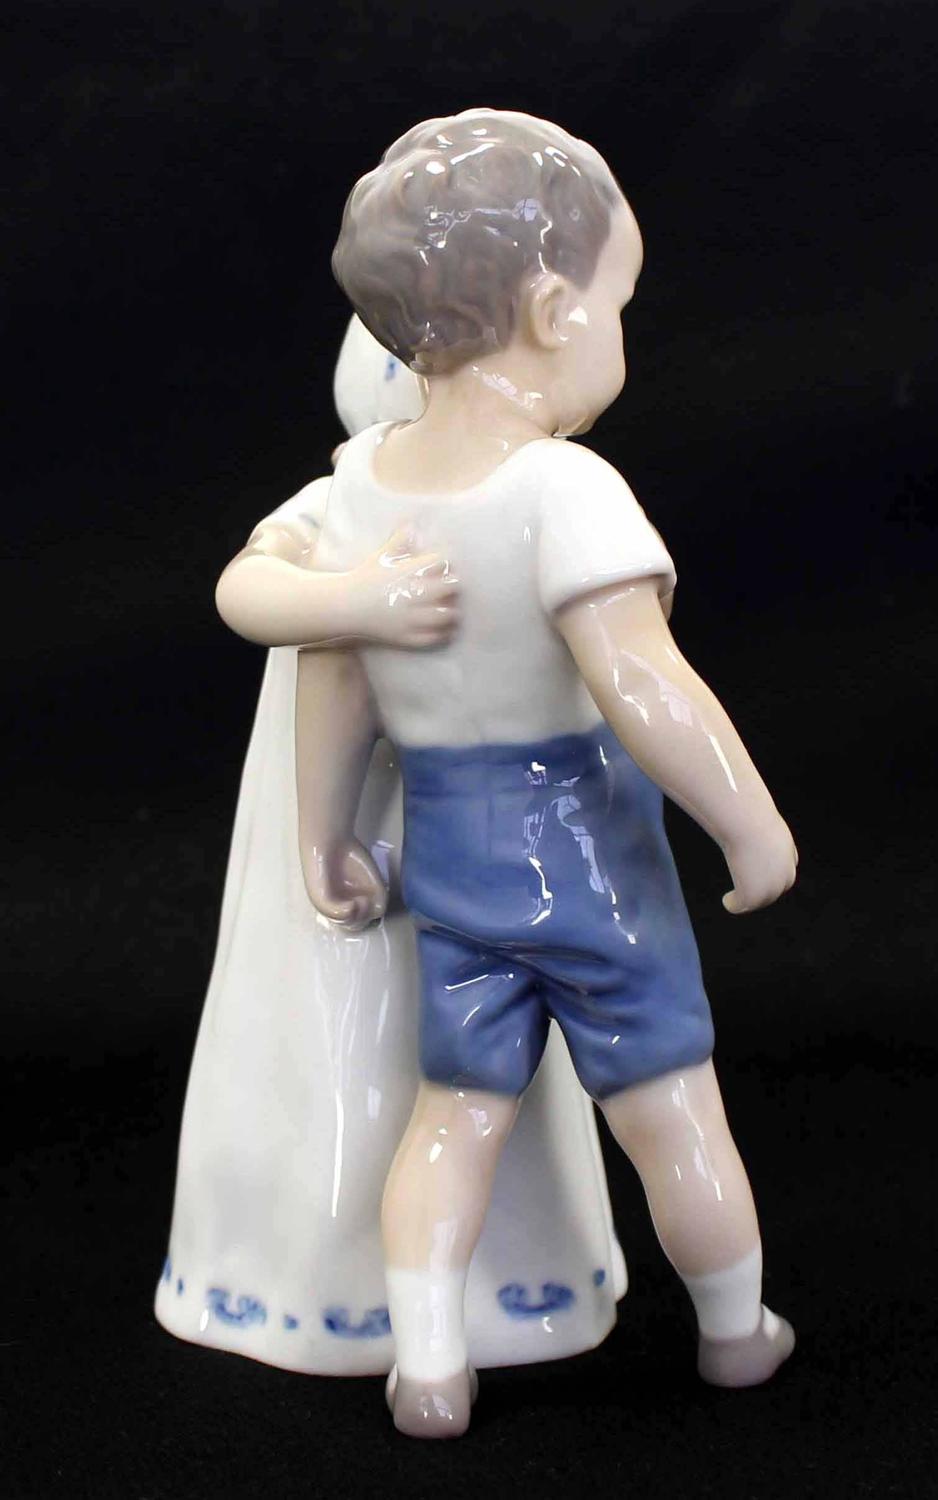 Dating royal copenhagen figurines